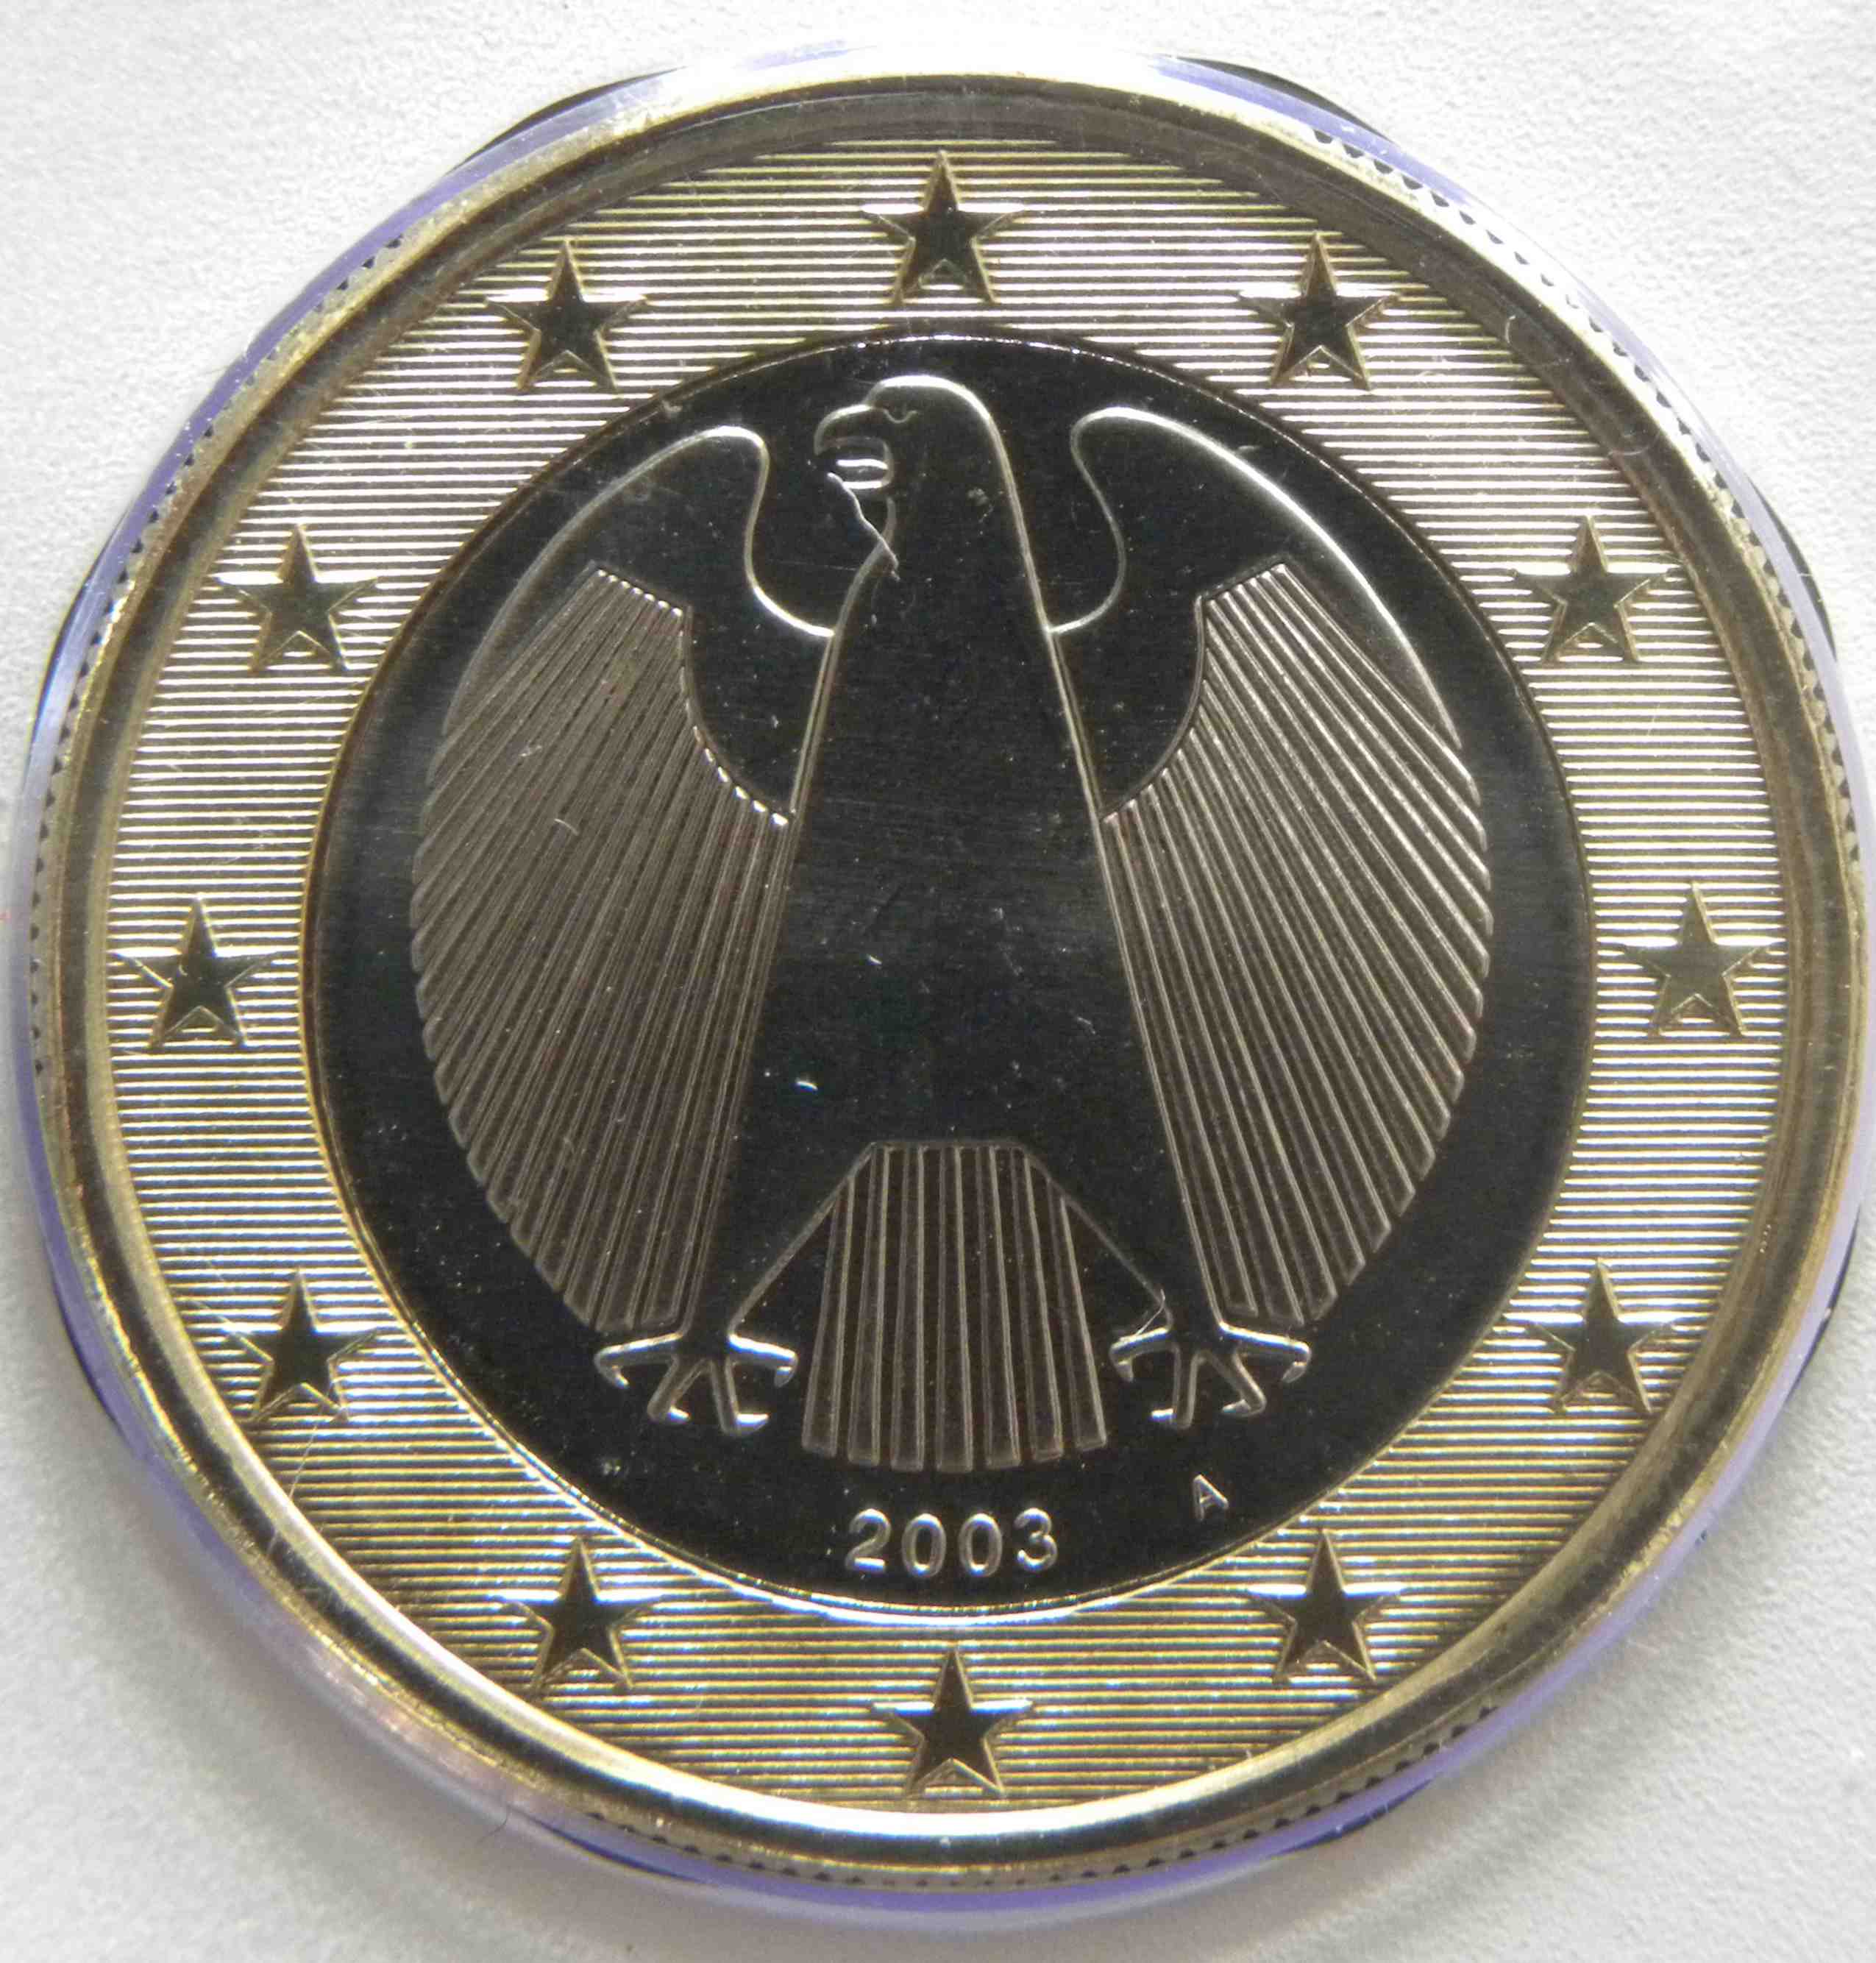 LeMO-Objekt: Deutsche 1-Euro-Münze